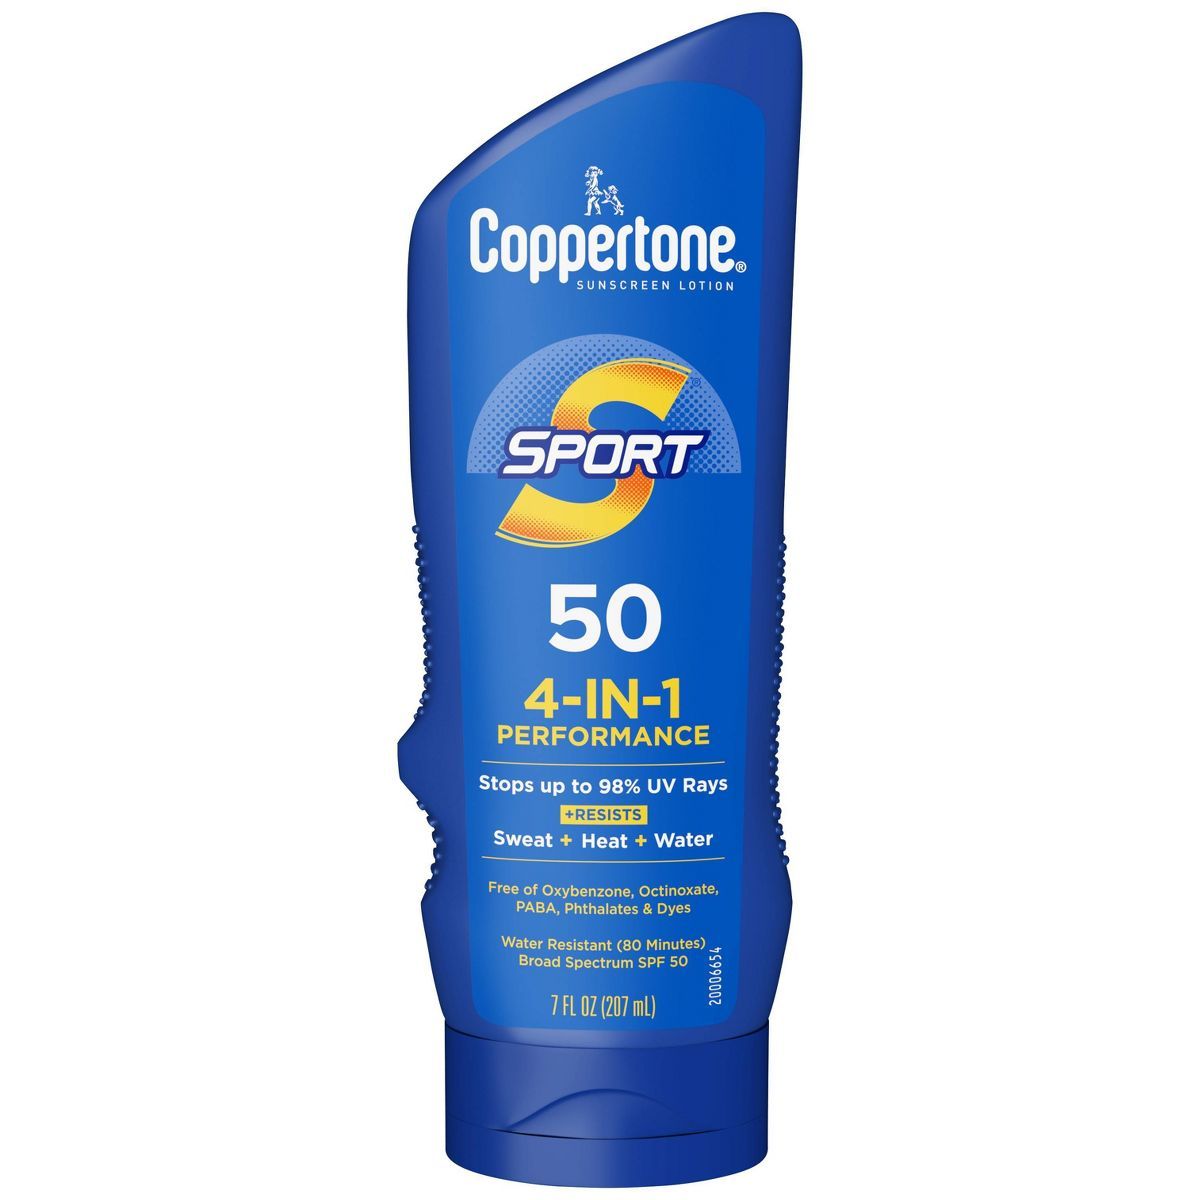 Coppertone Sport Sunscreen Lotion - SPF 50 | Target